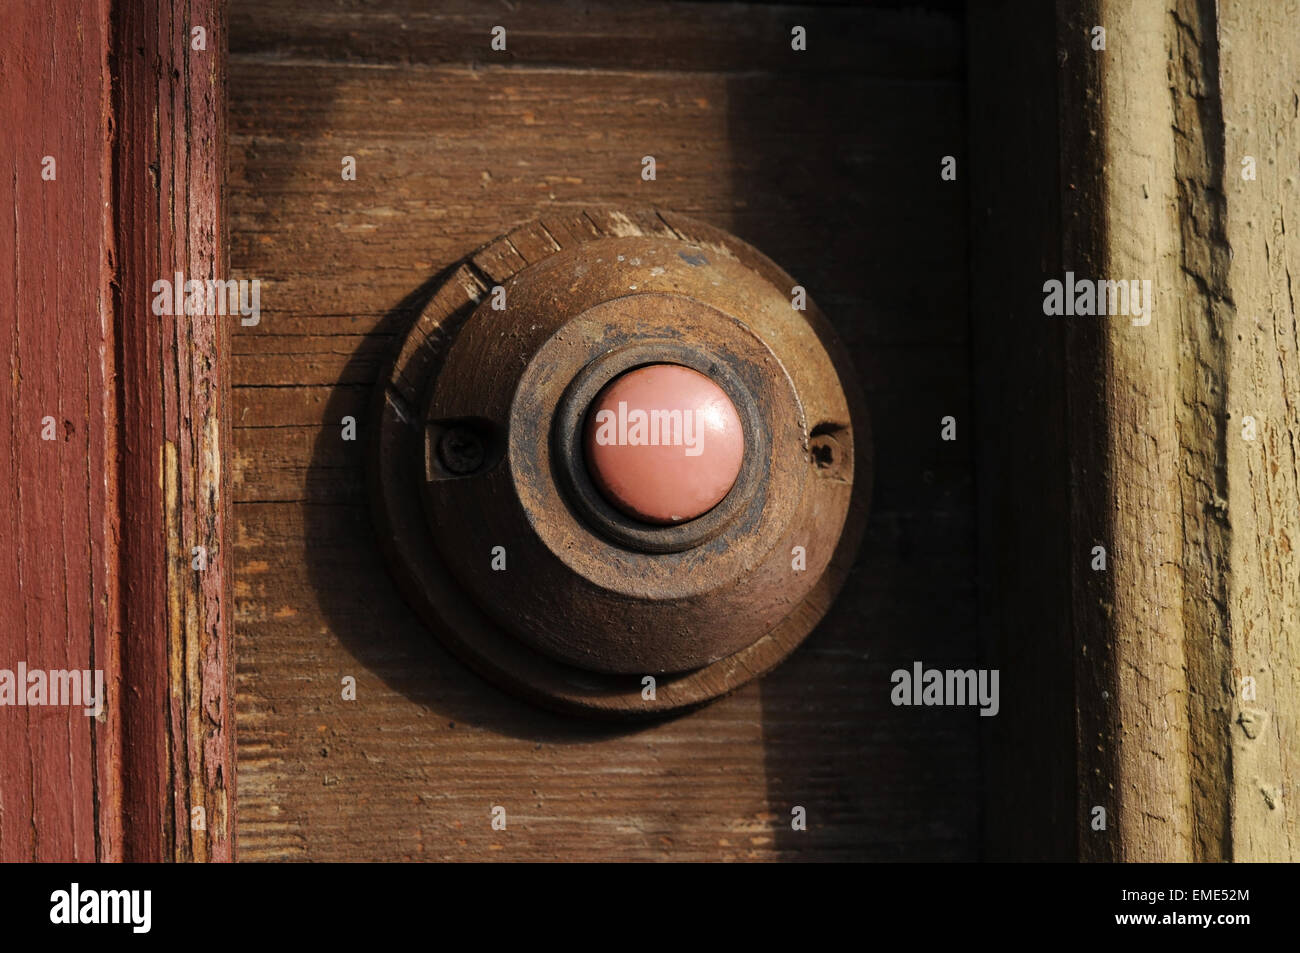 El timbre de la puerta en una casa antigua. Close-up Fotografía de stock -  Alamy